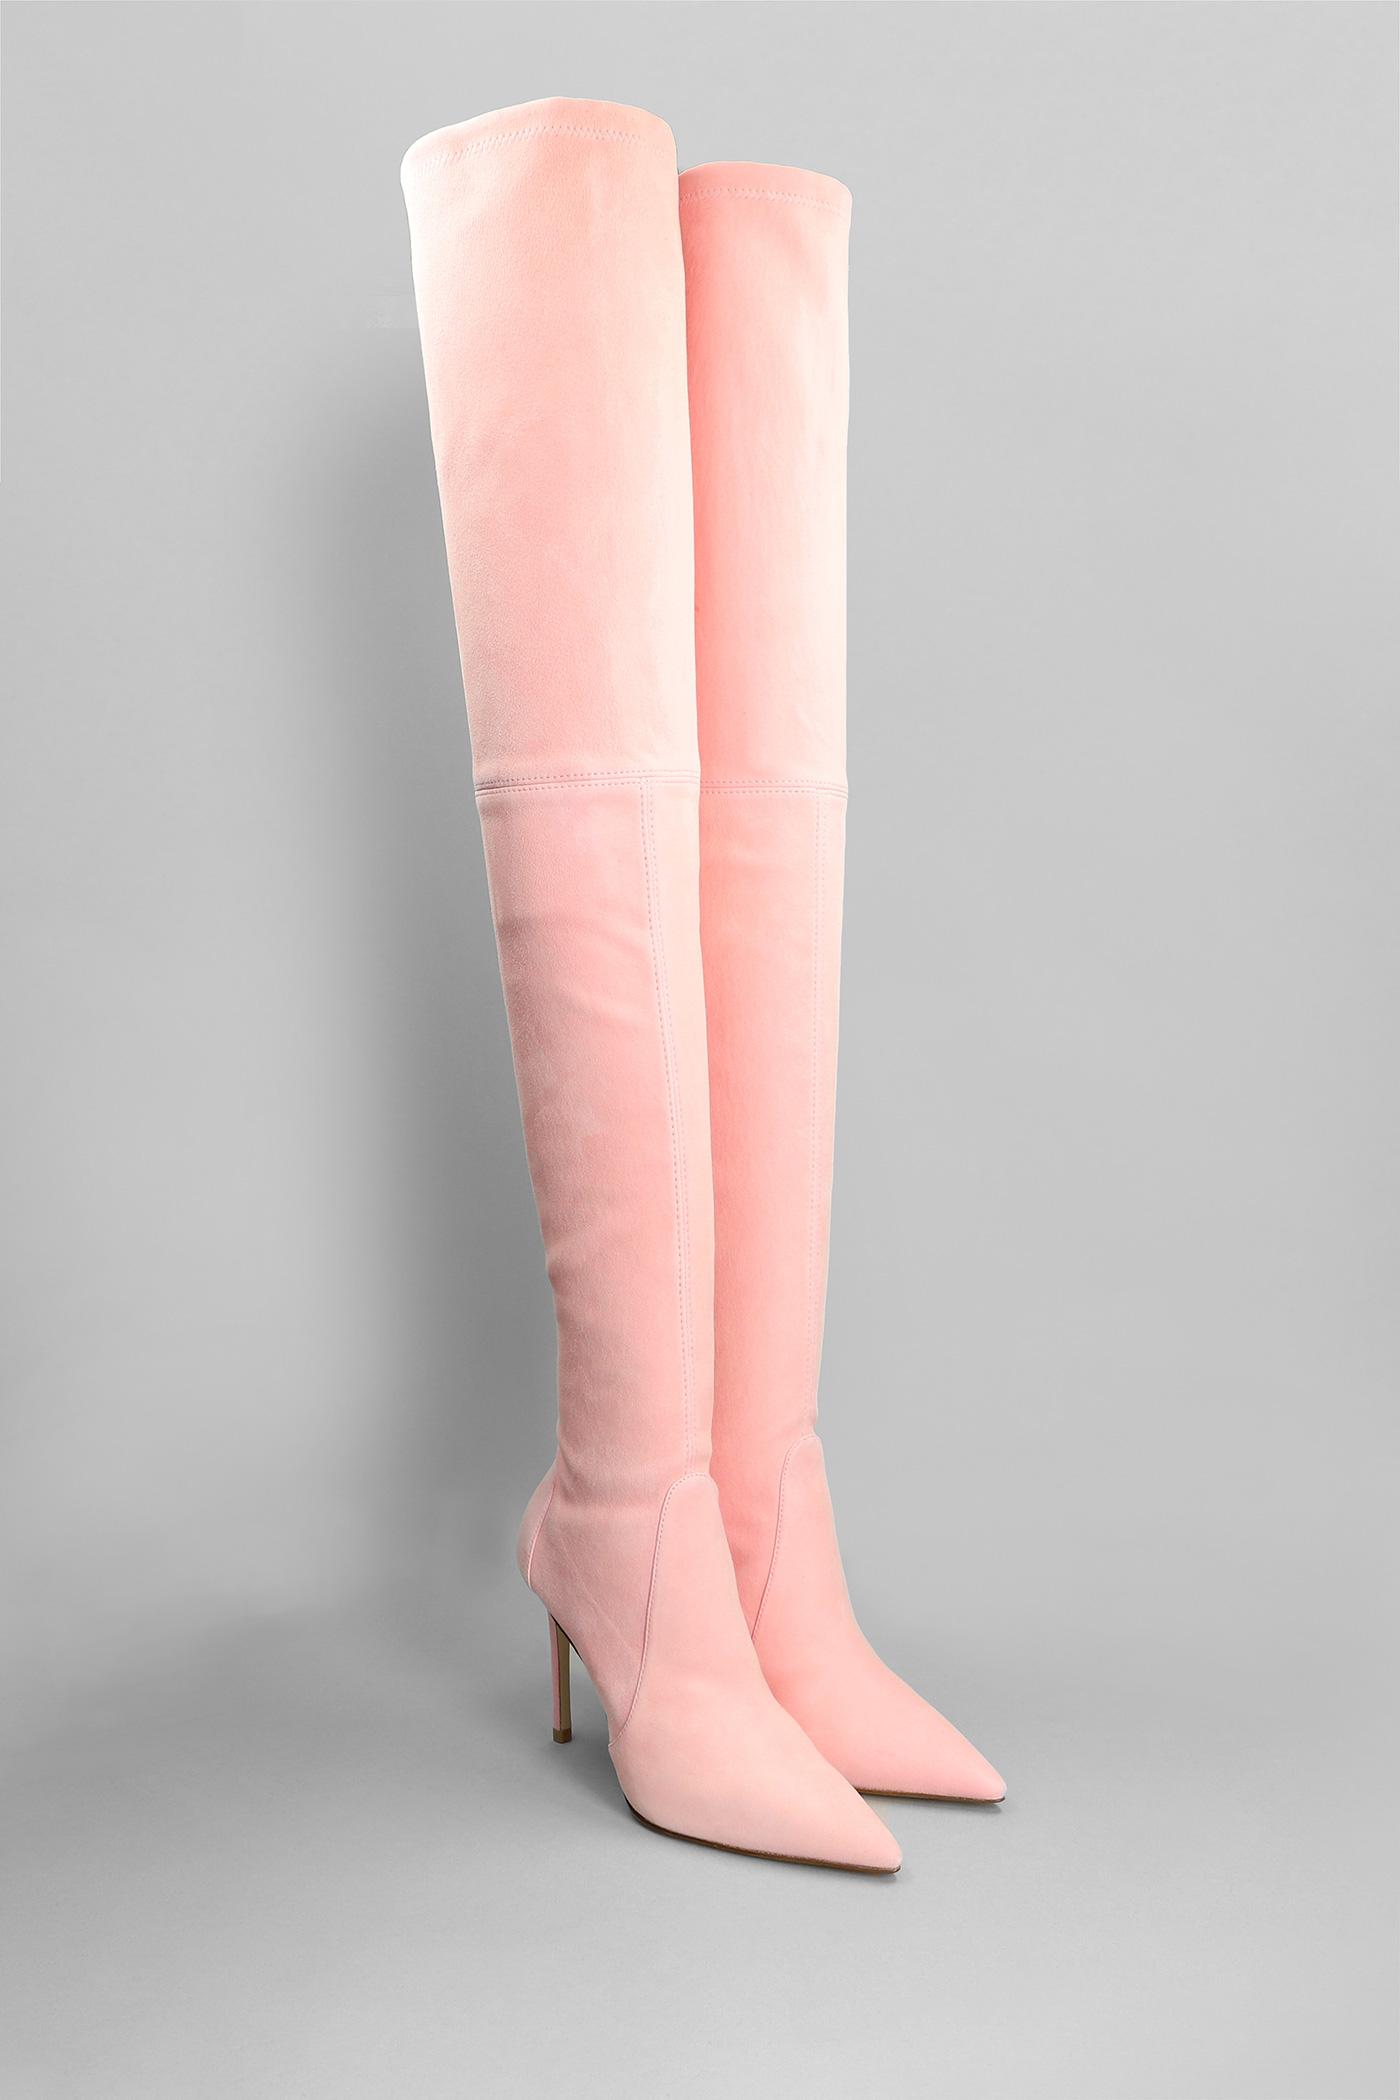 Stuart Weitzman Ultrasturt 100 High Heels Boots In Rose-pink Suede | Lyst